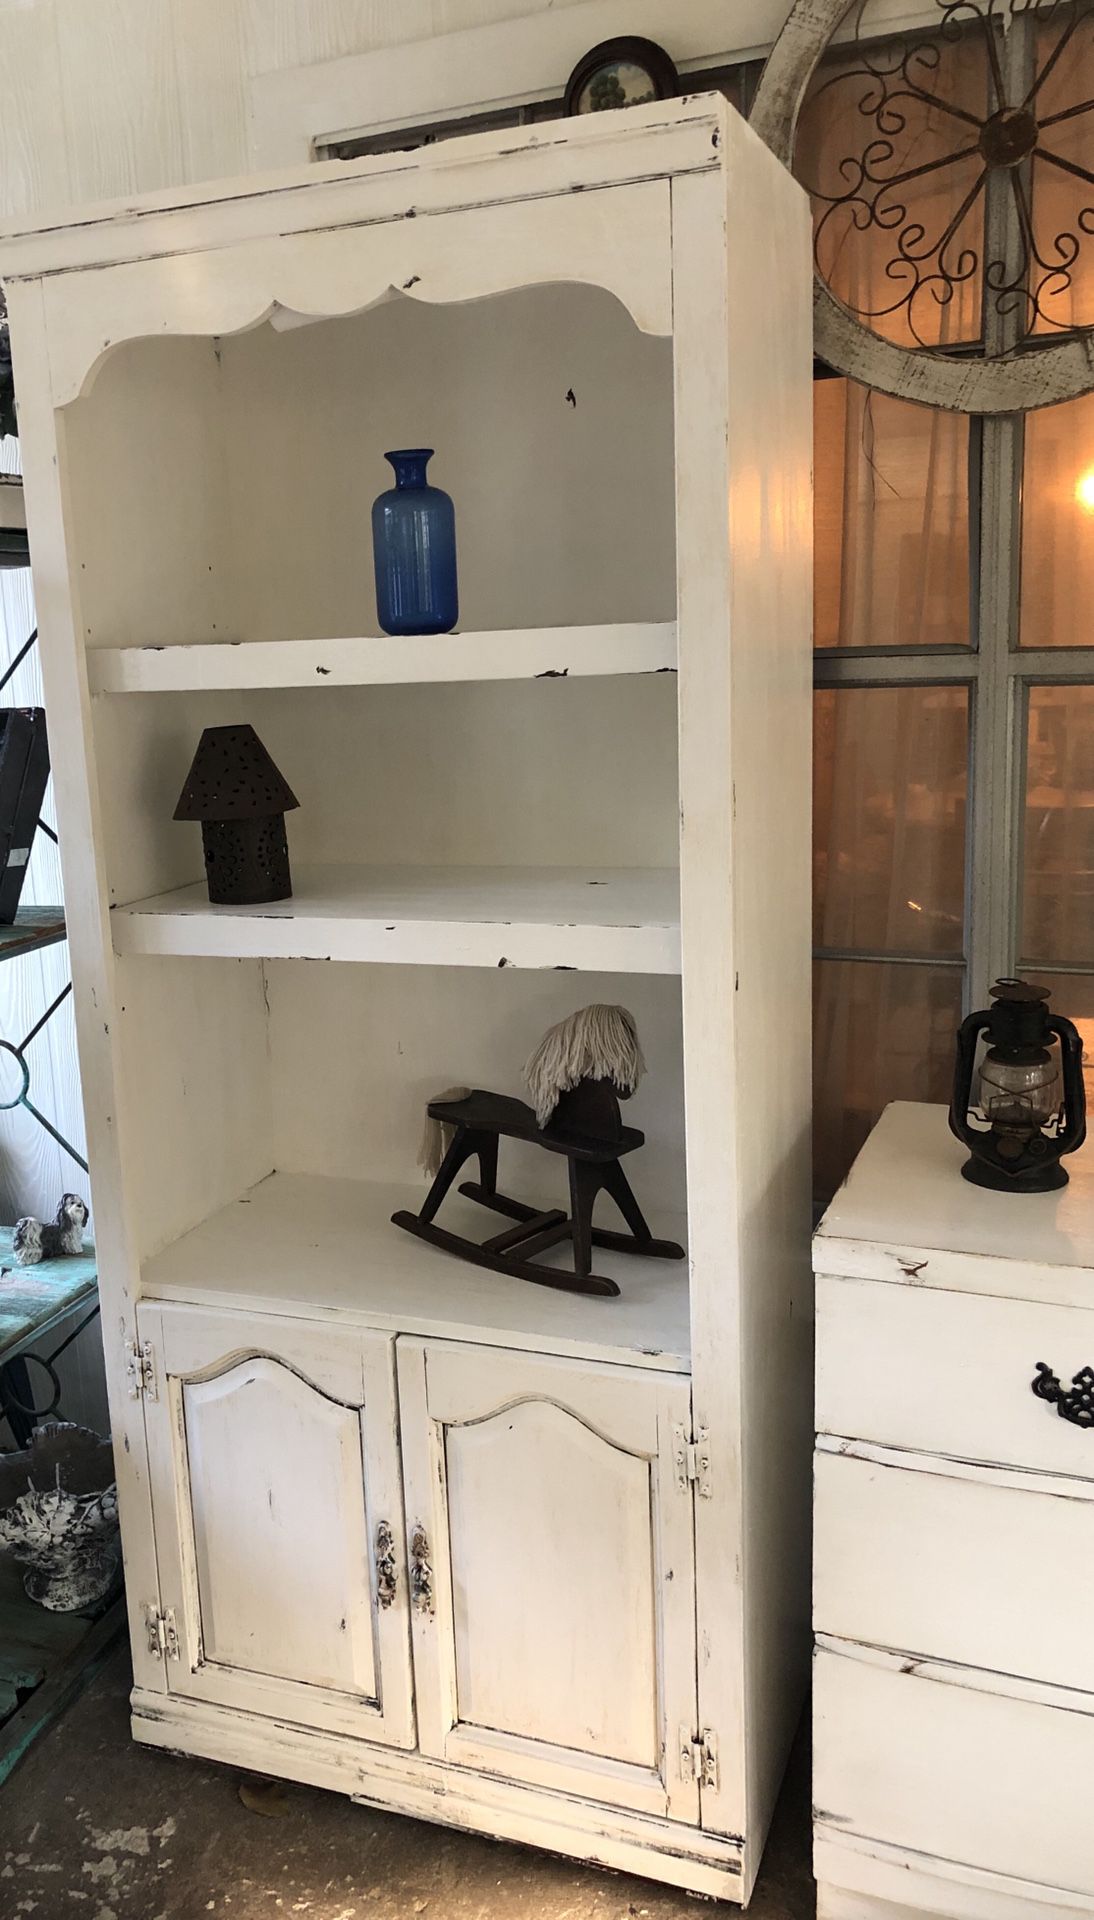 Shelf cabinet